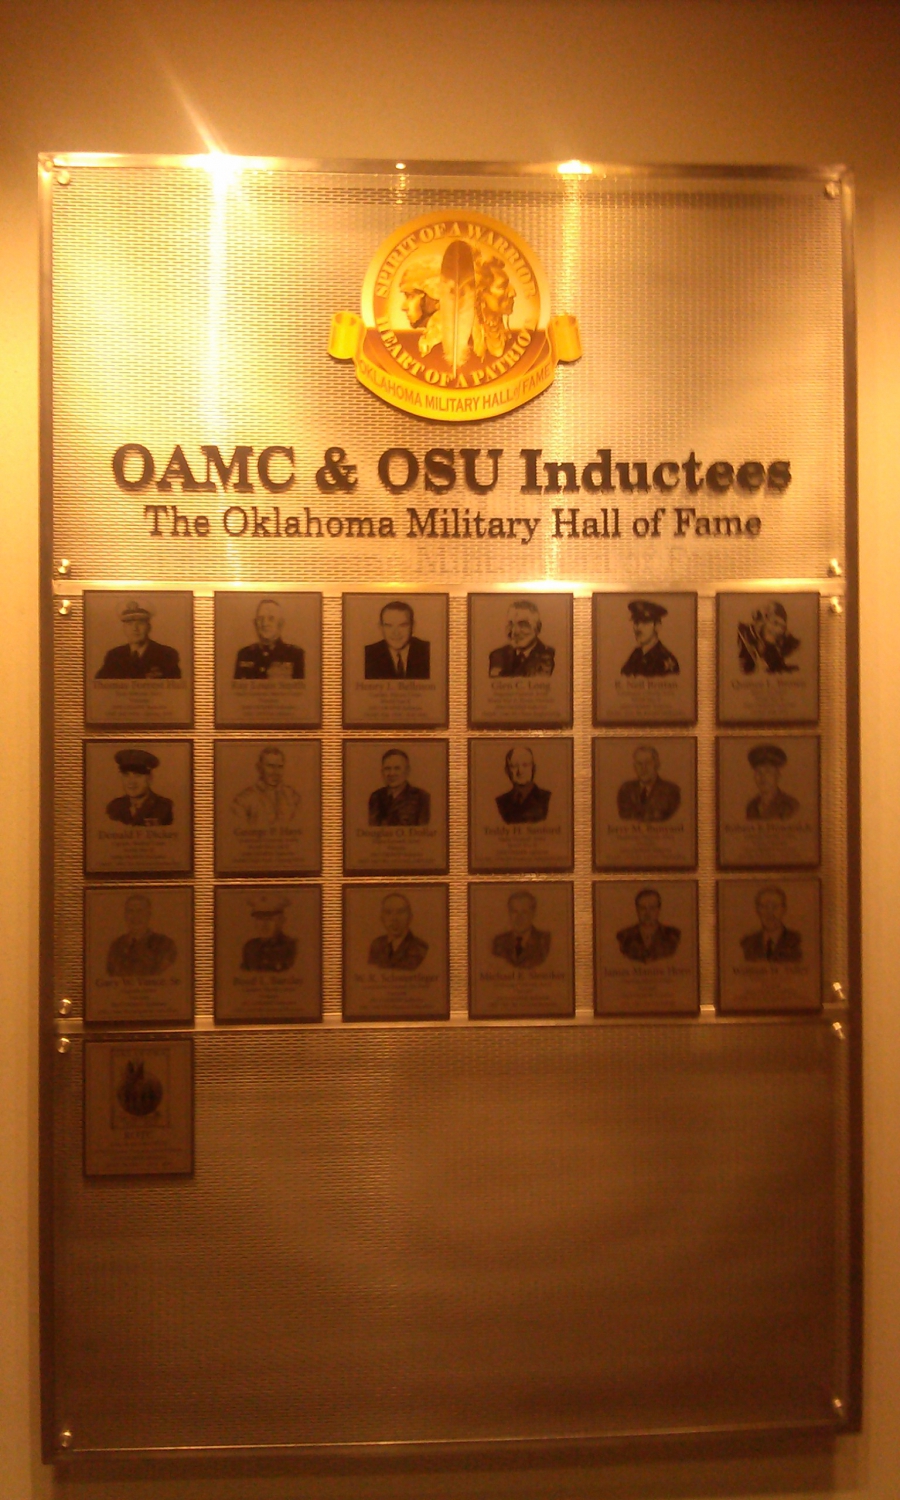 Oklahoma State University (OSU) Veteran Success Center